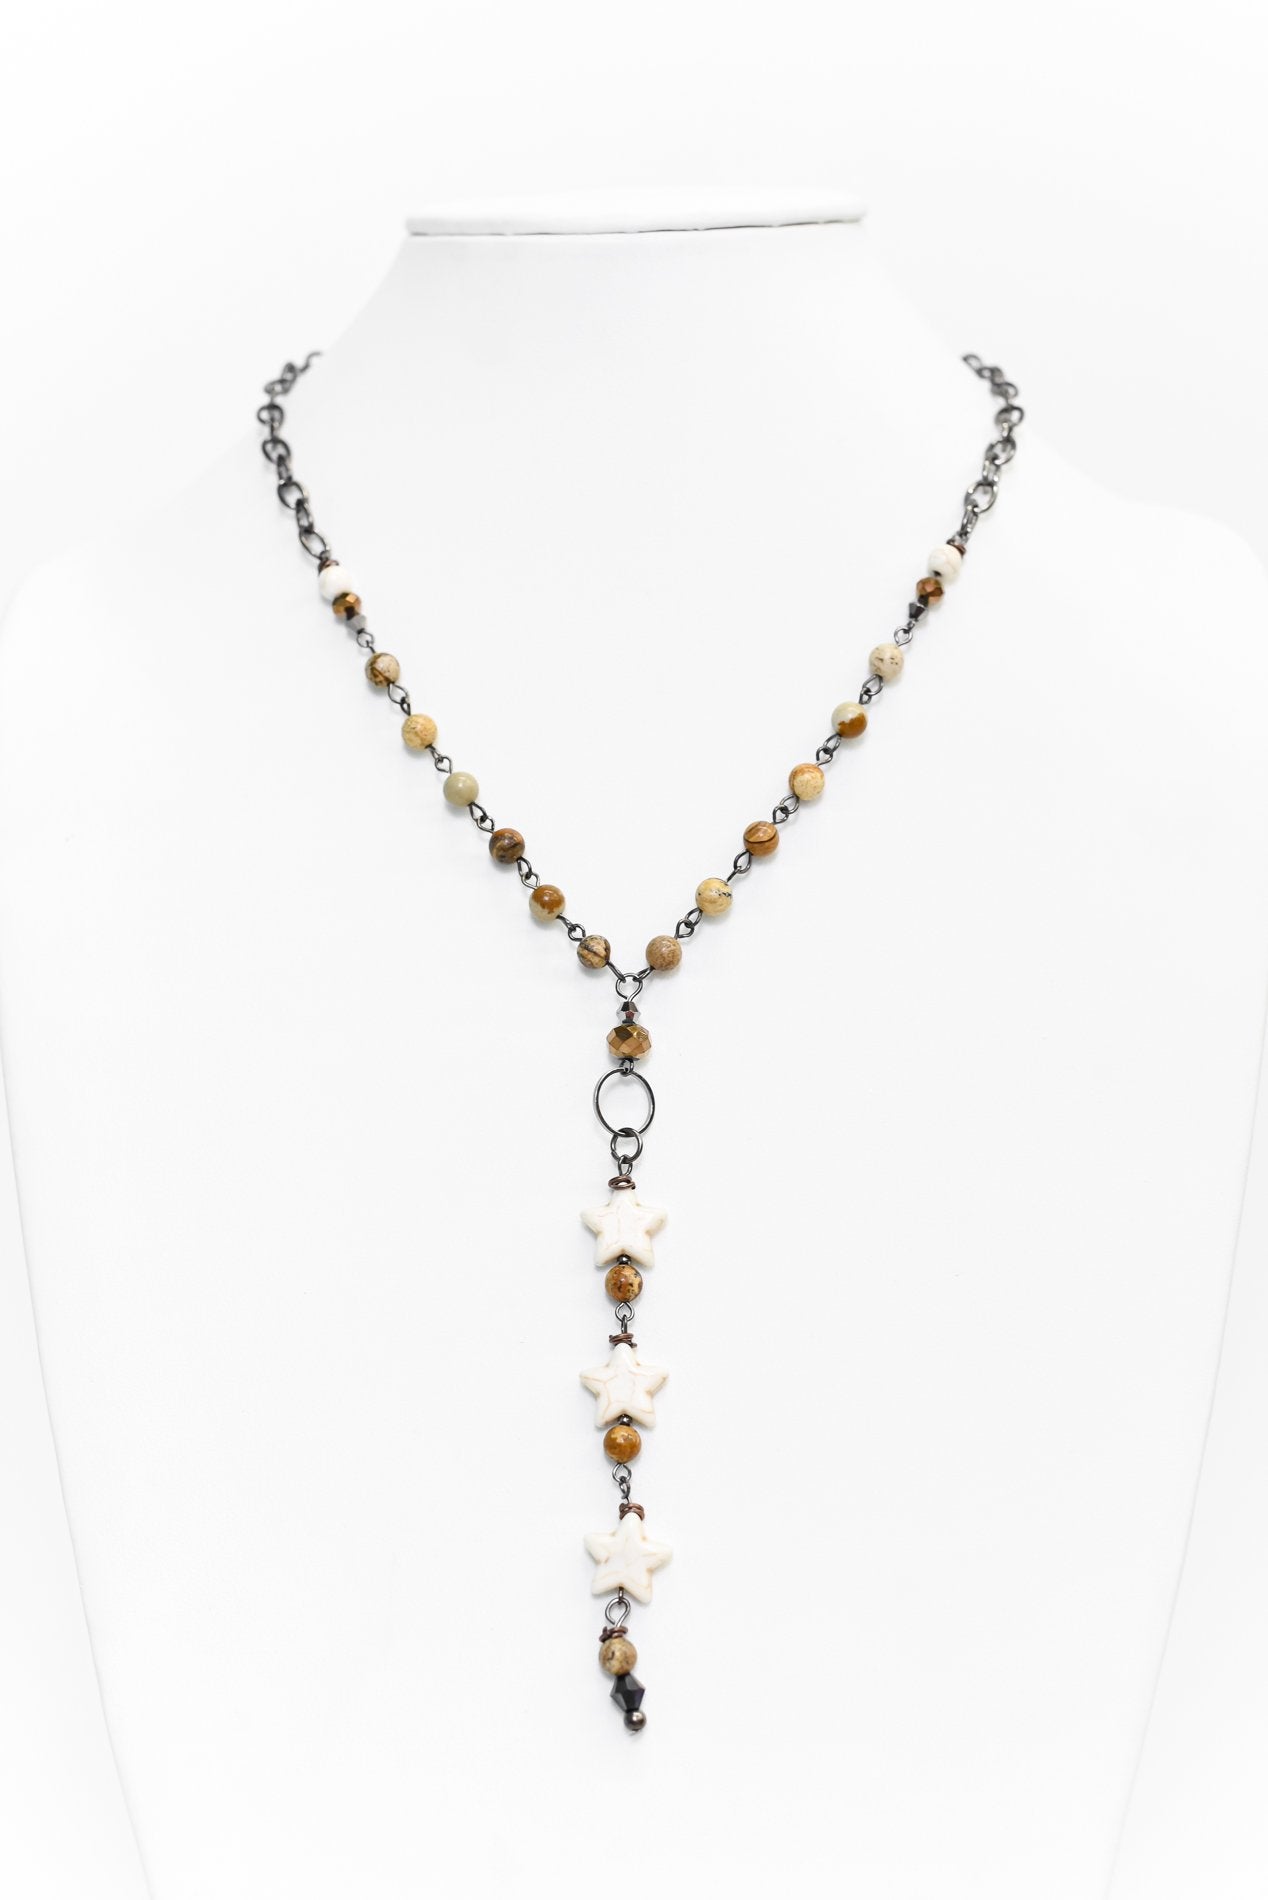 Brown Marble Beaded/Ivory Star Tassel On Platinum Chain Necklace - NEK3444BR